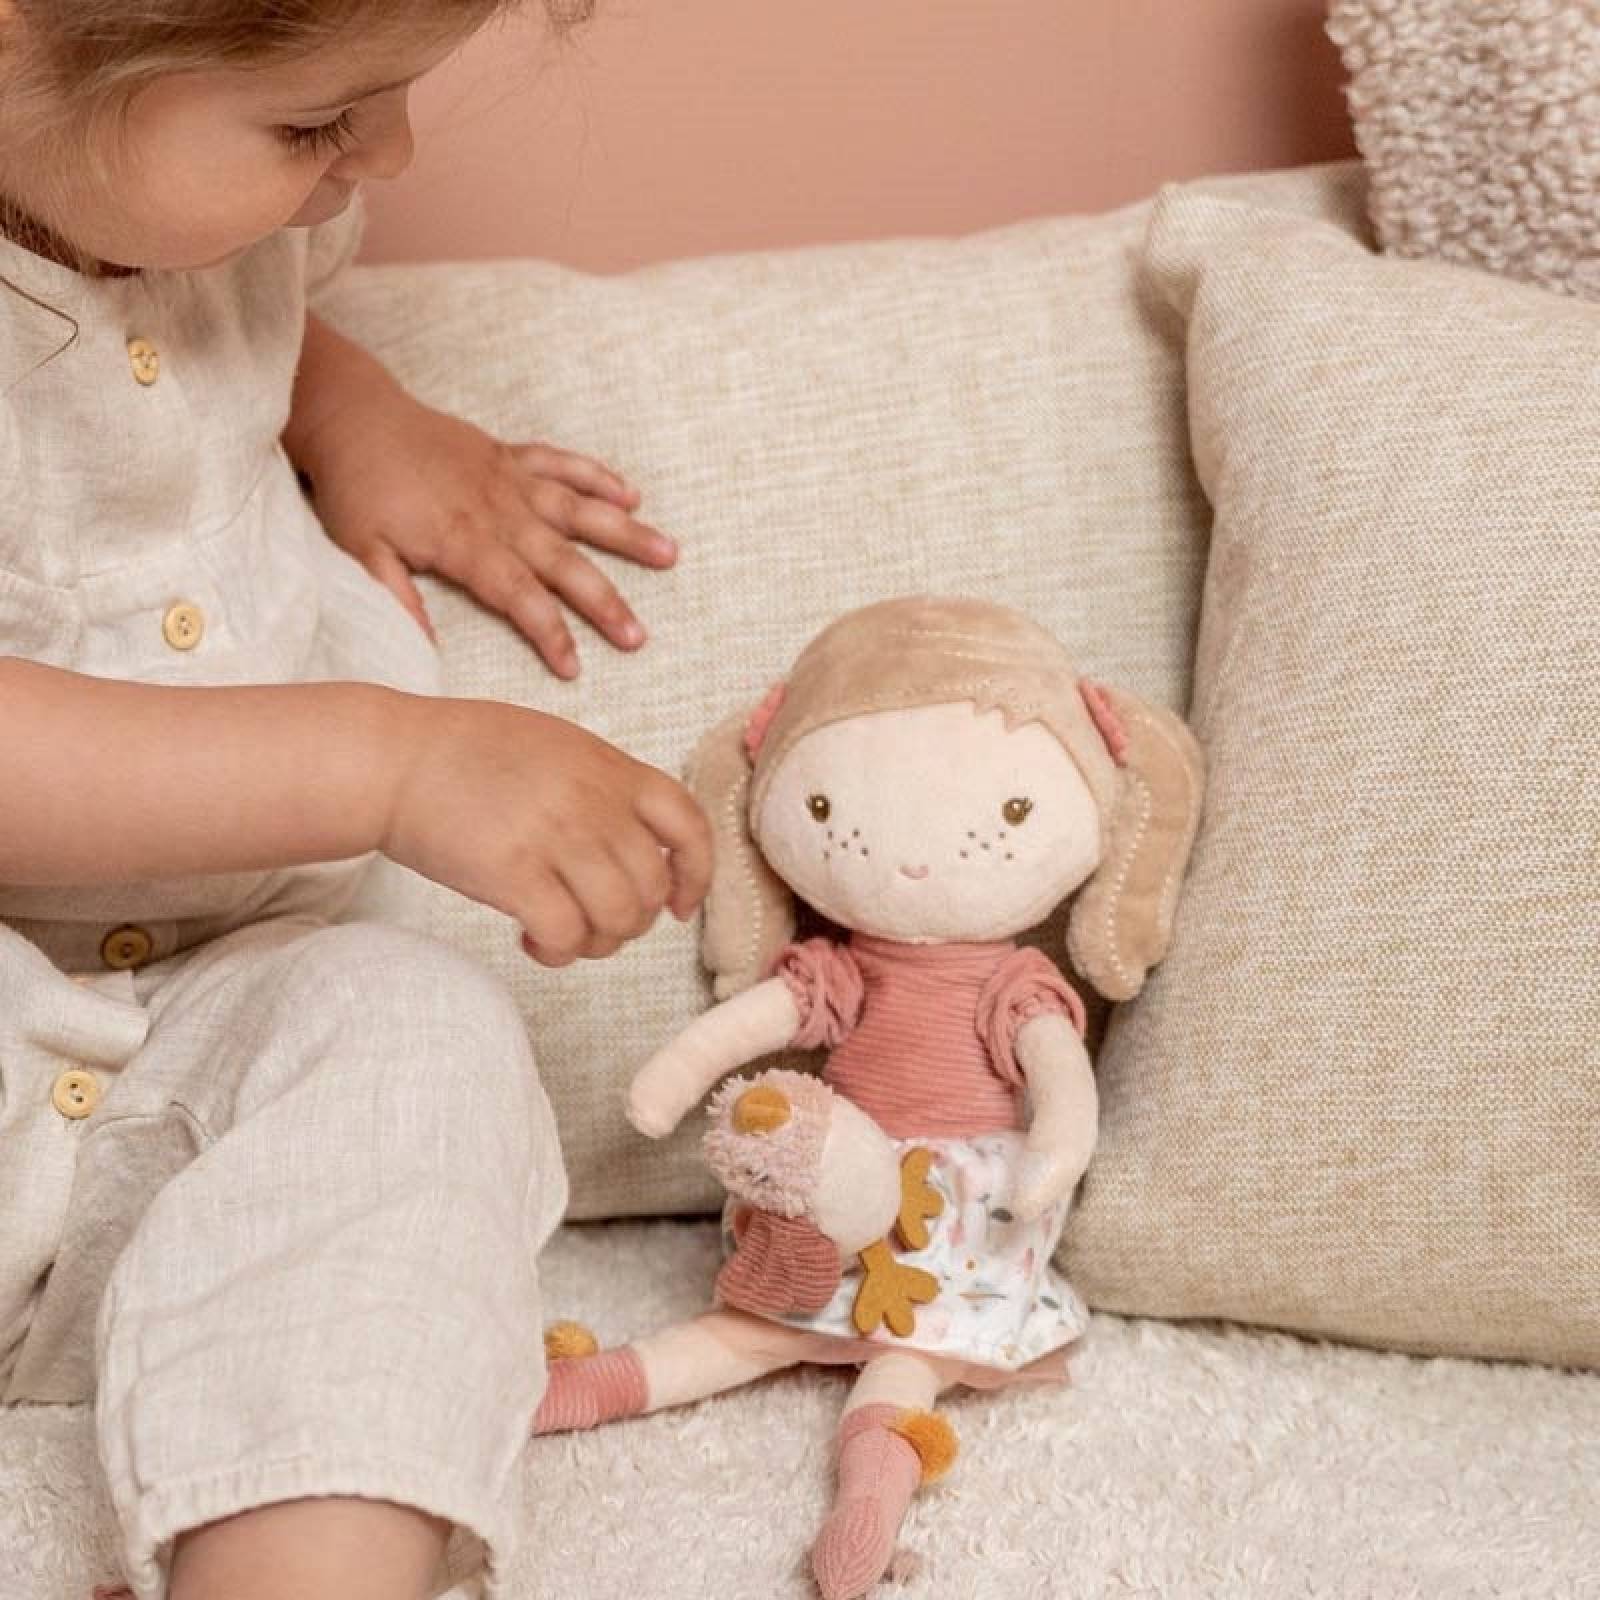 Anna - Soft Cuddle Doll By Little Dutch 1+ thumbnails